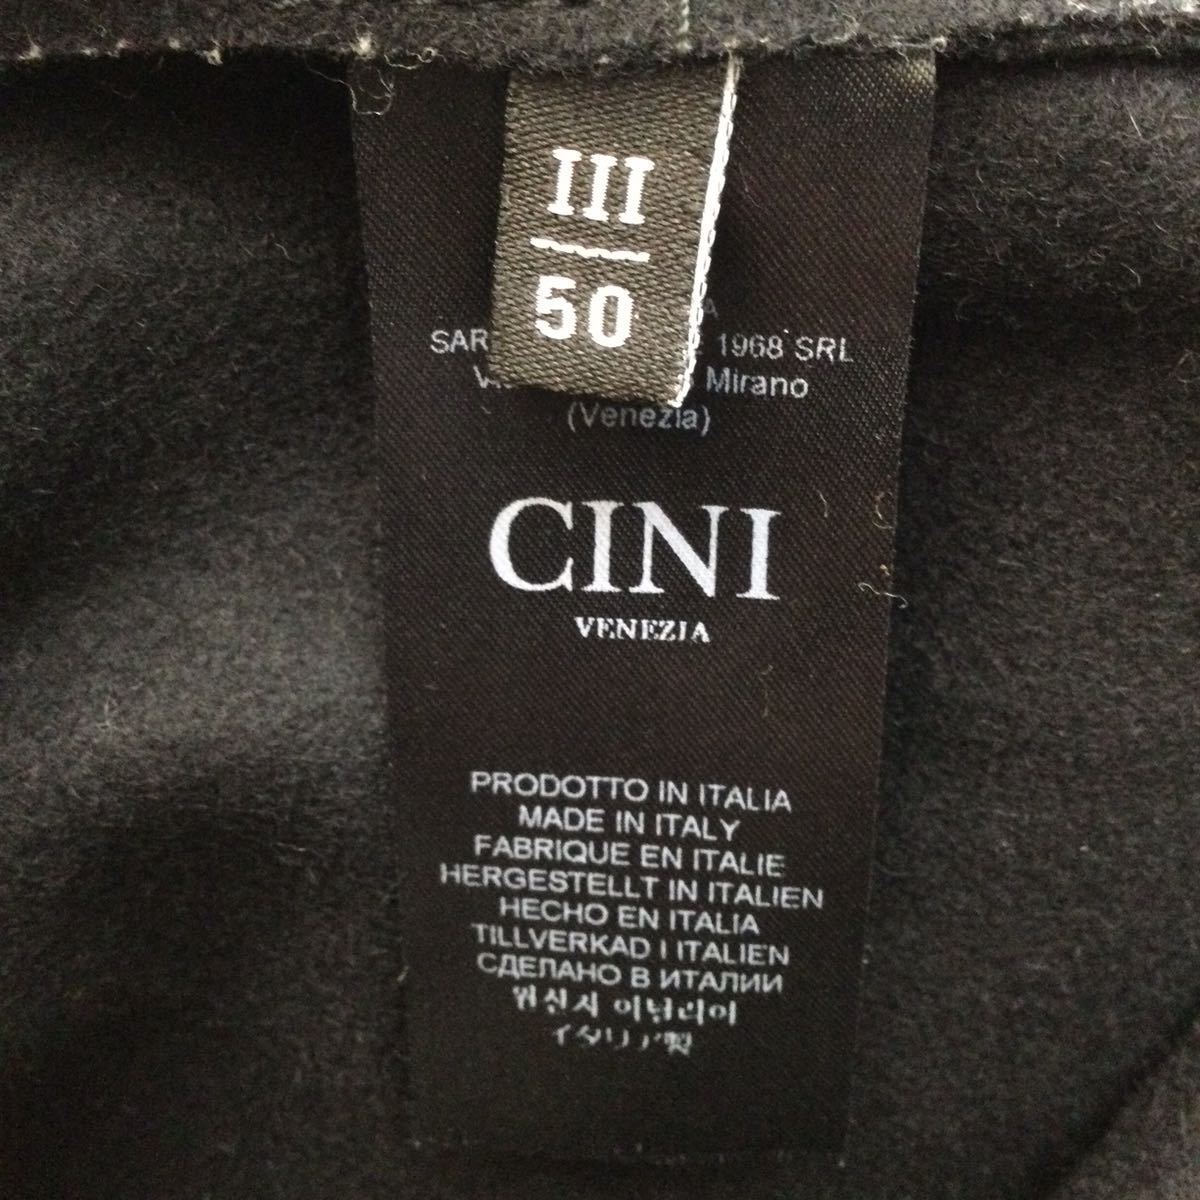 CINI VENEZIAchi knee bene Cheer duffle coat DUFFLE COAT with a hood wool hanger attaching black size Ⅲ men's 645463